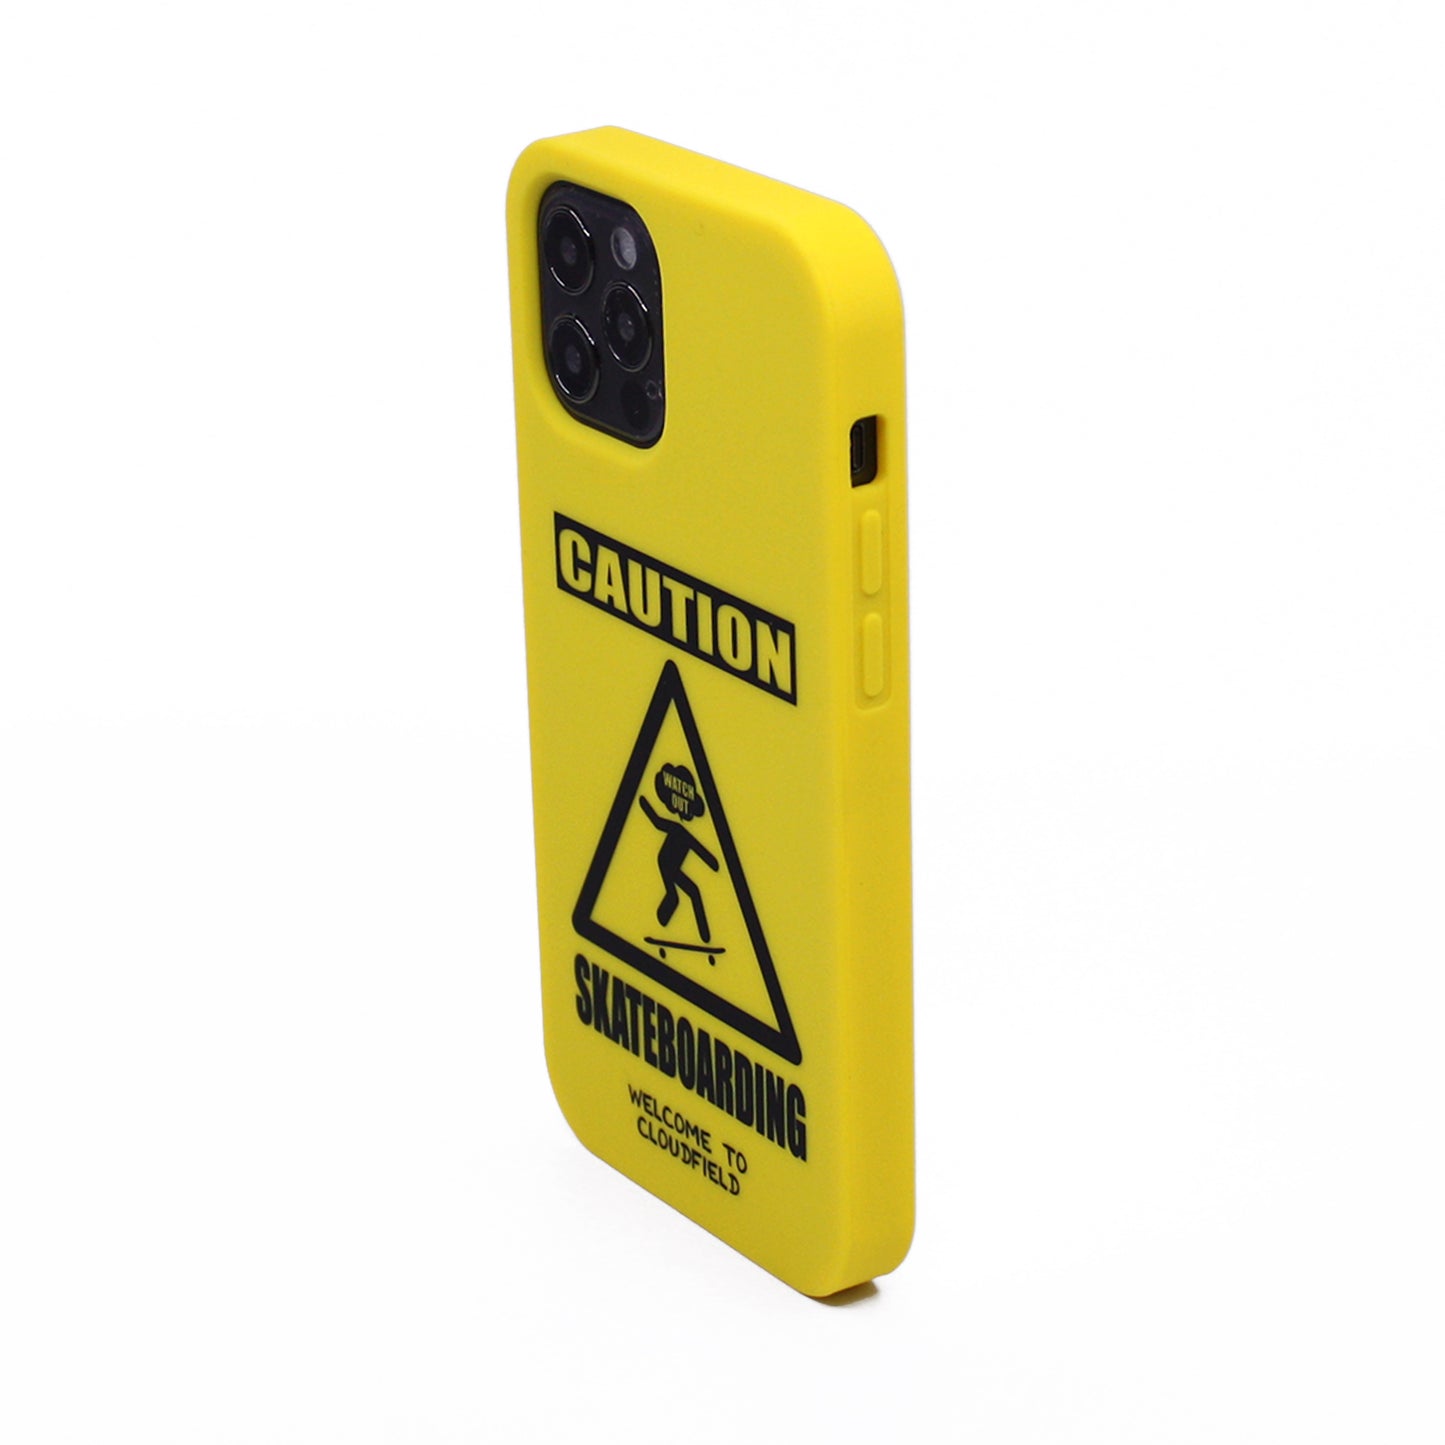 iPhone 12/12 Pro Simple Case - Caution Skateboarding